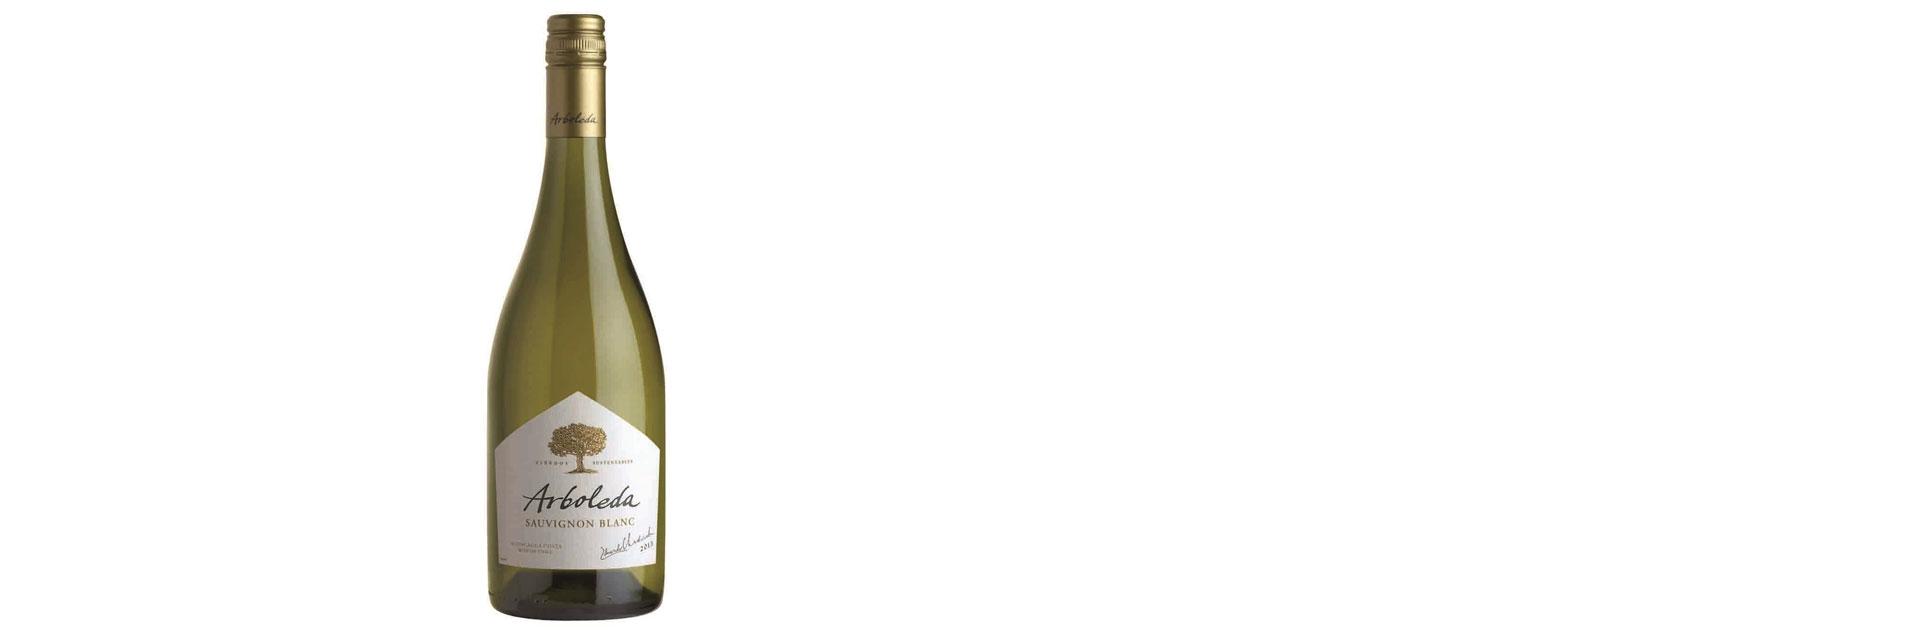 Rượu Vang Chile Arboleda Sauvignon Blanc